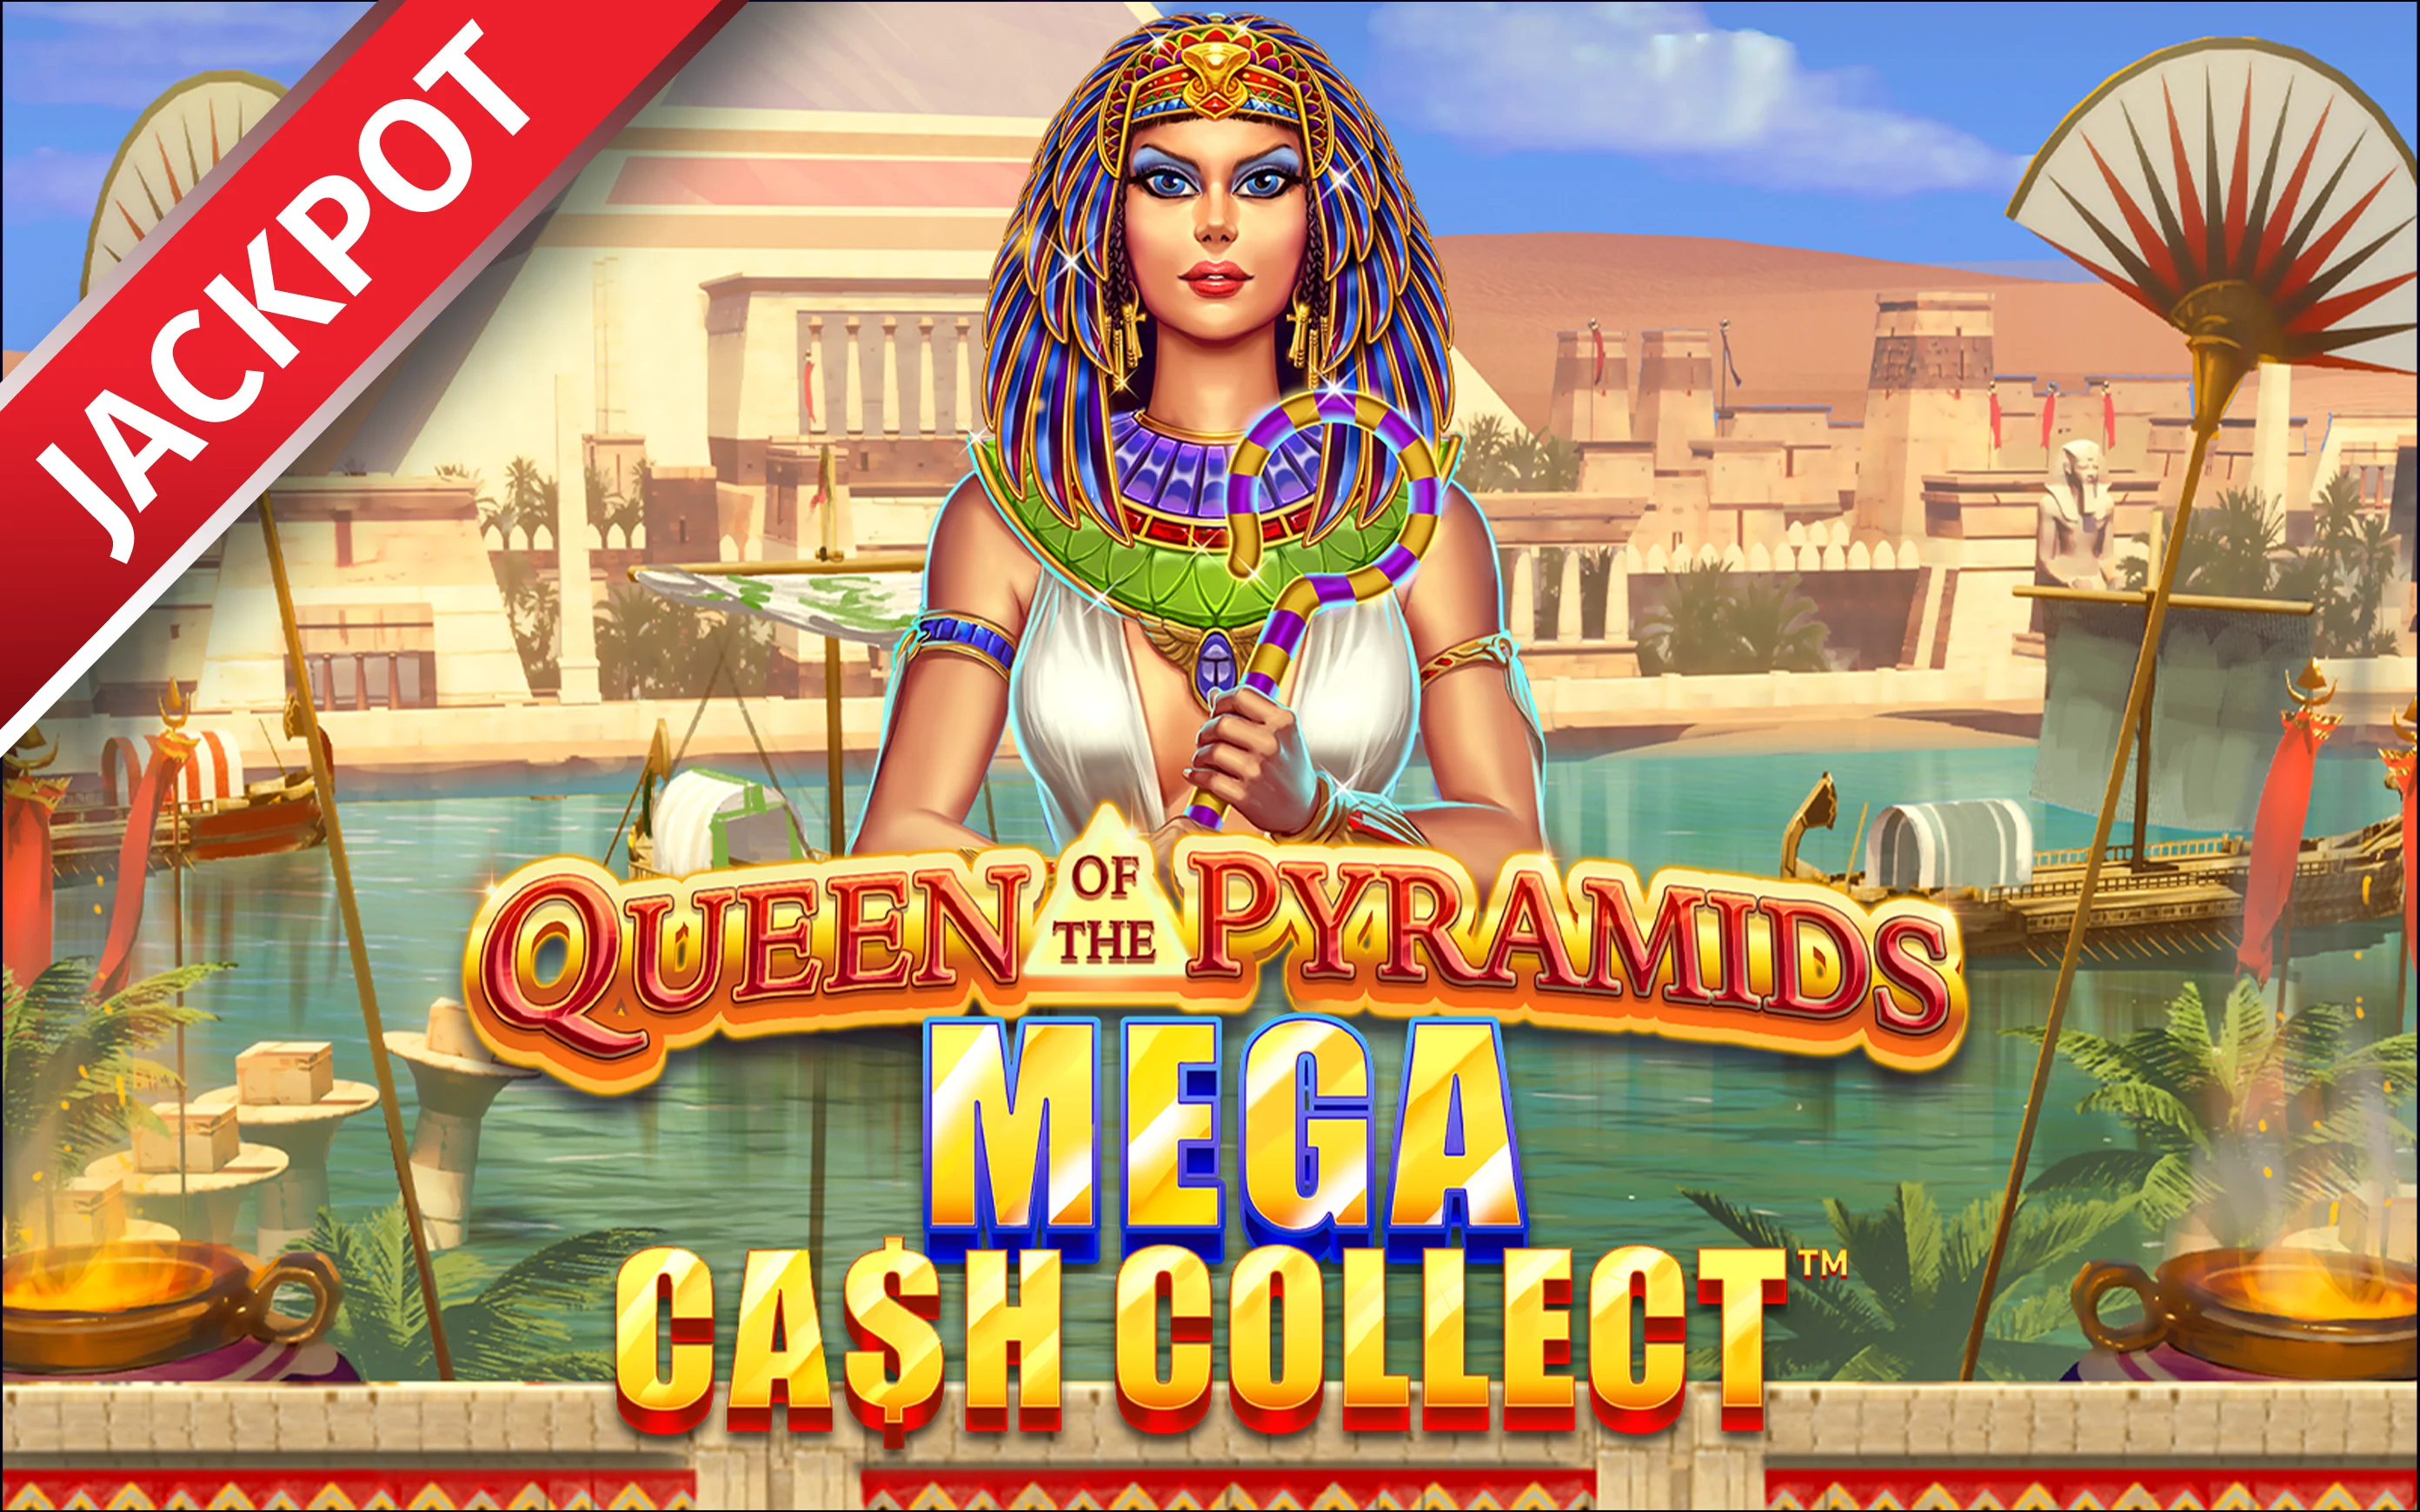 Juega a Queen of the Pyramids: Mega Cash Collect™ en el casino en línea de Starcasino.be